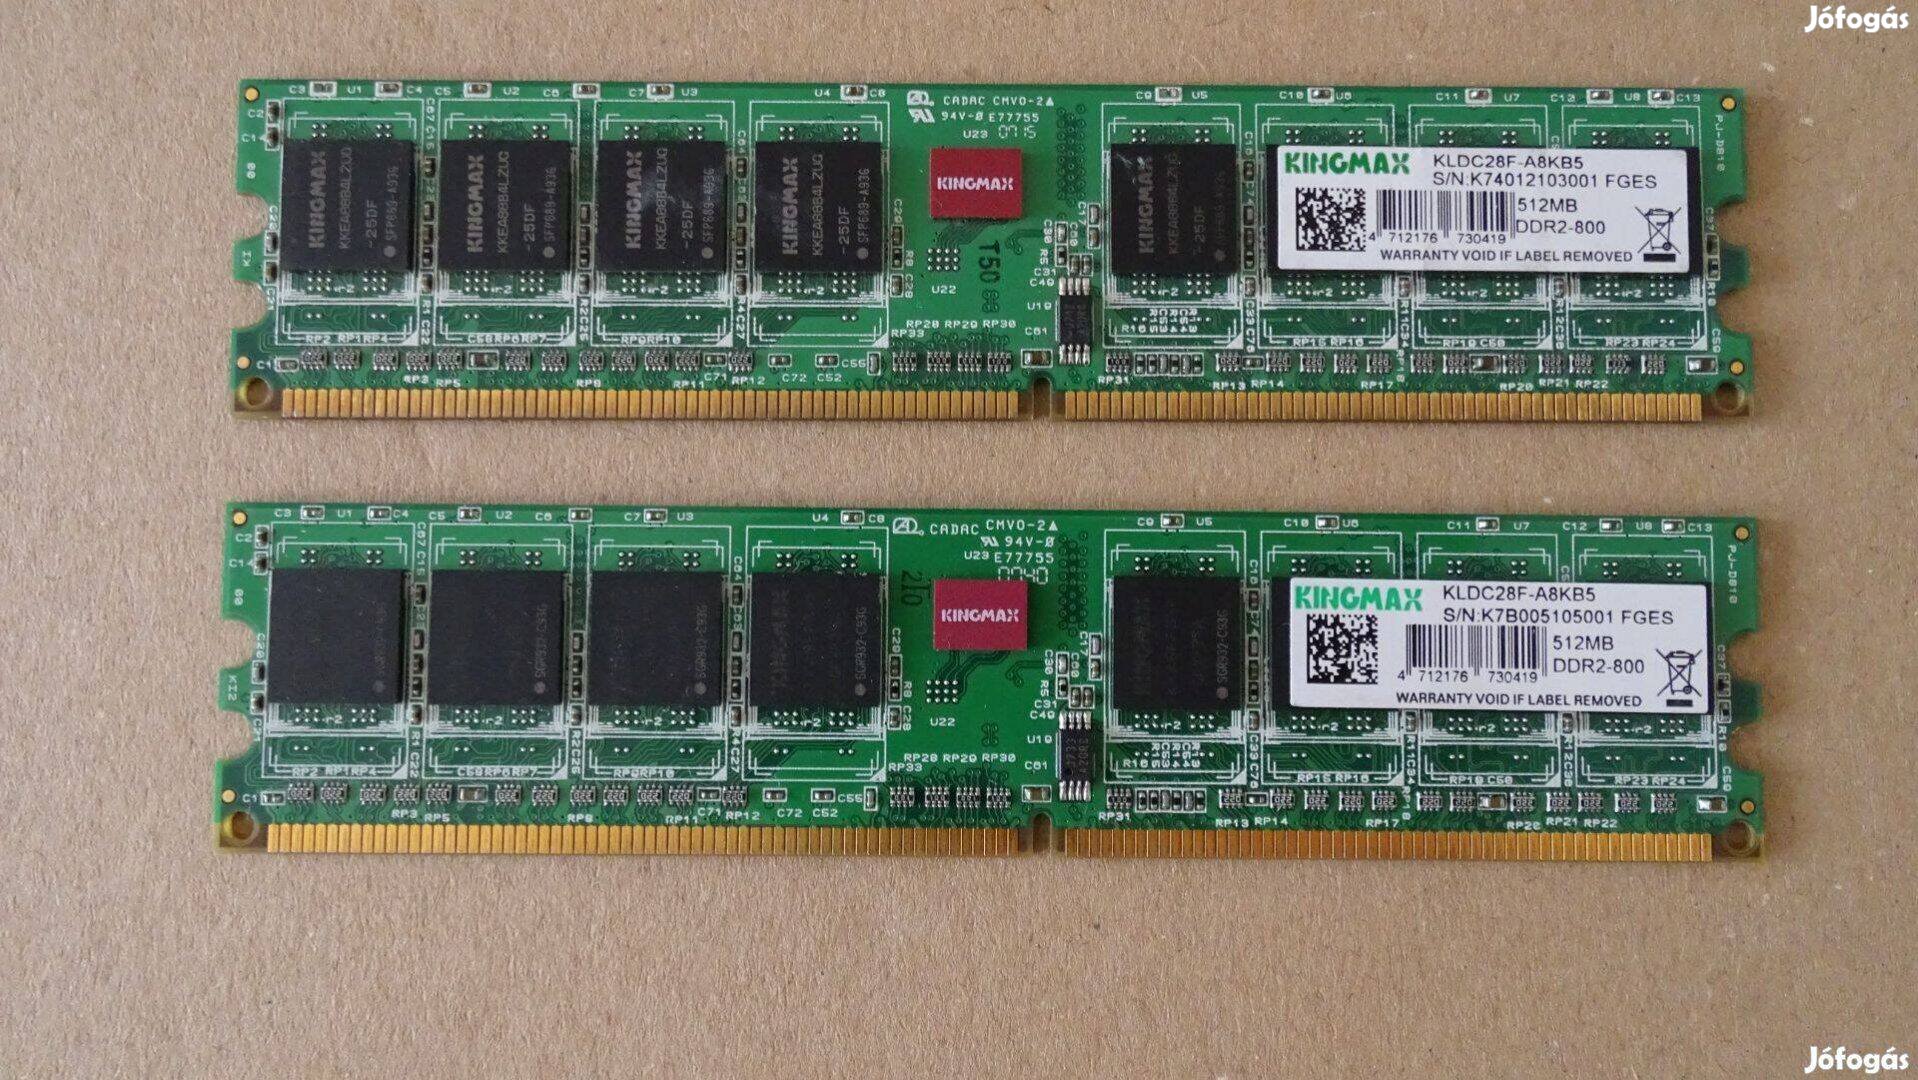 Kingmax DDR2-800 memóriák!